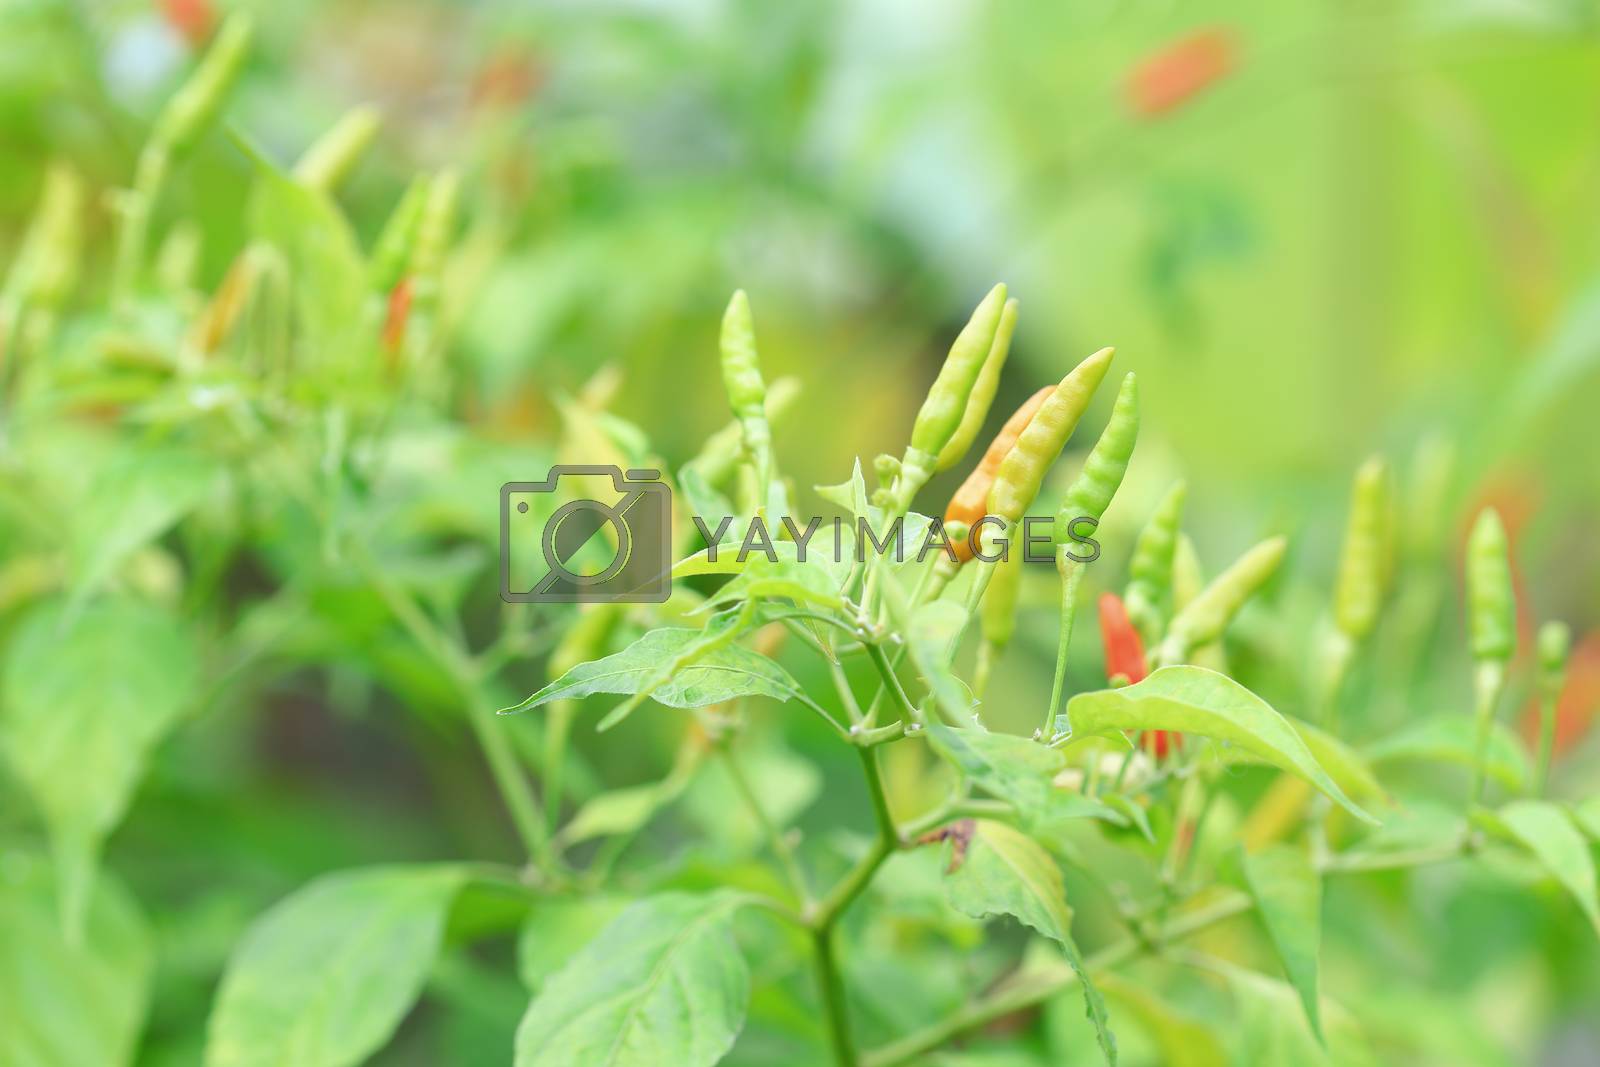 Royalty free image of Green chilli in organic farm  by phalakon